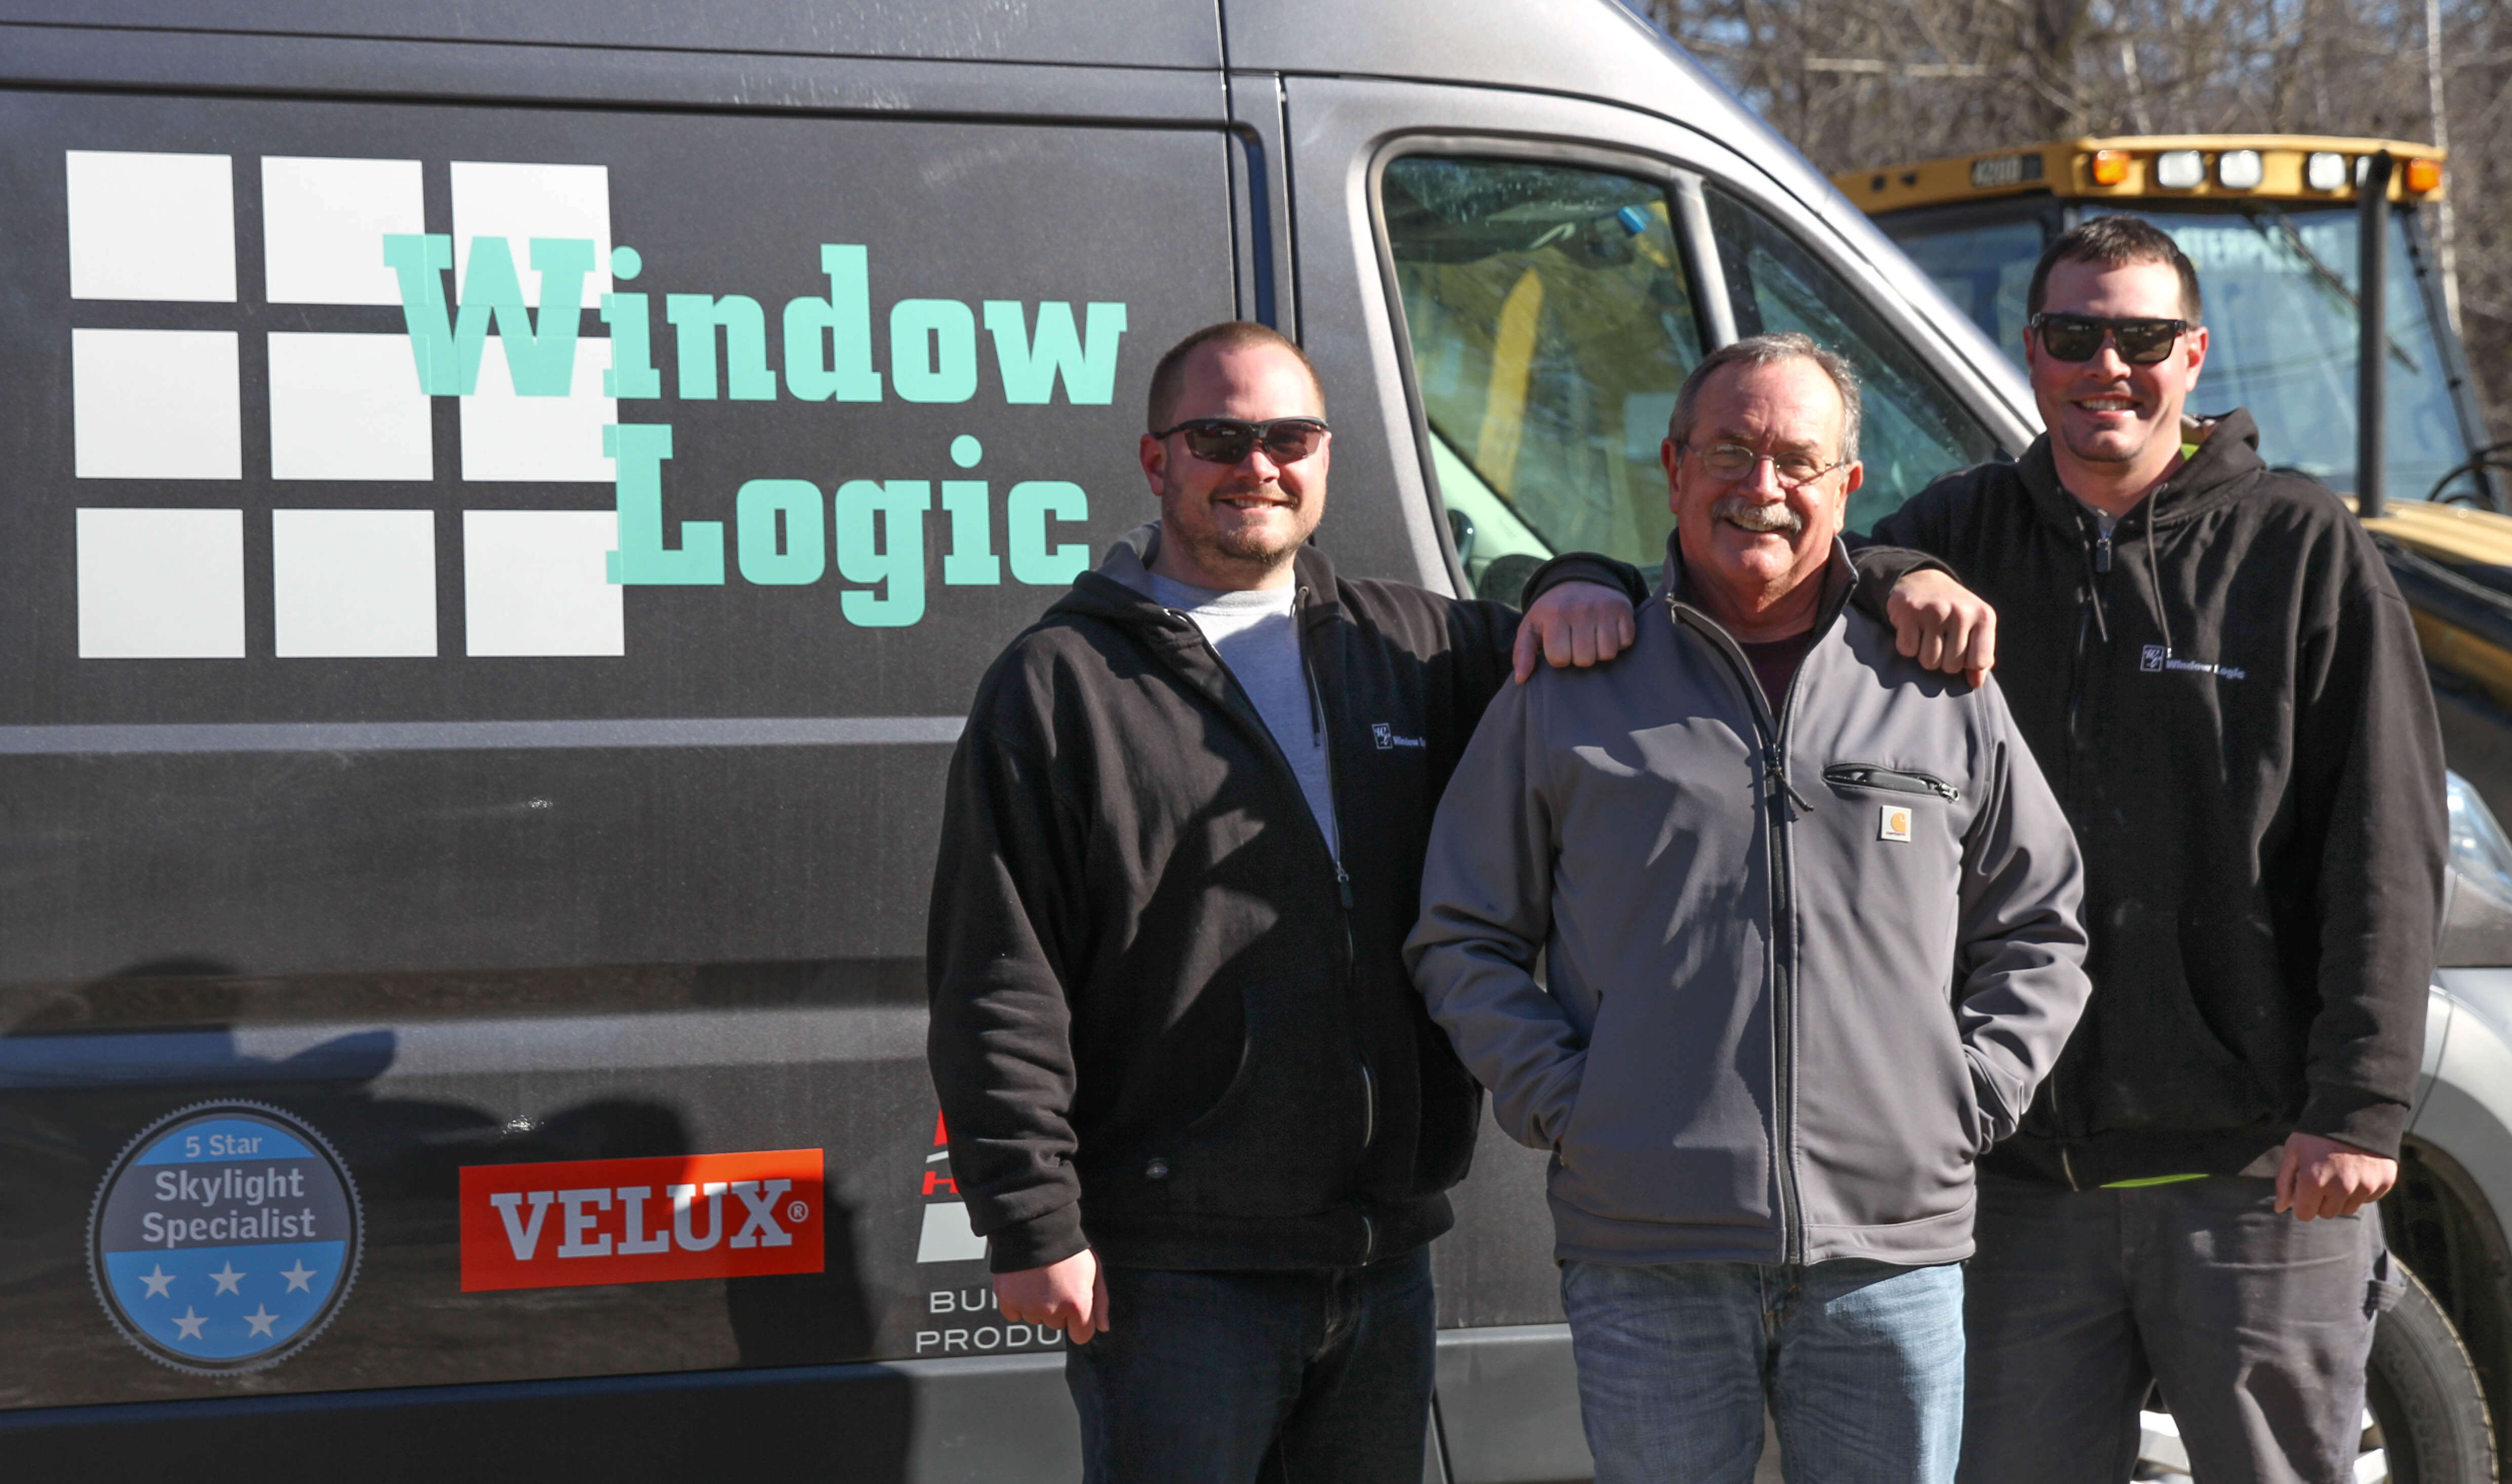 Window Logic General Contractors Inc Photo